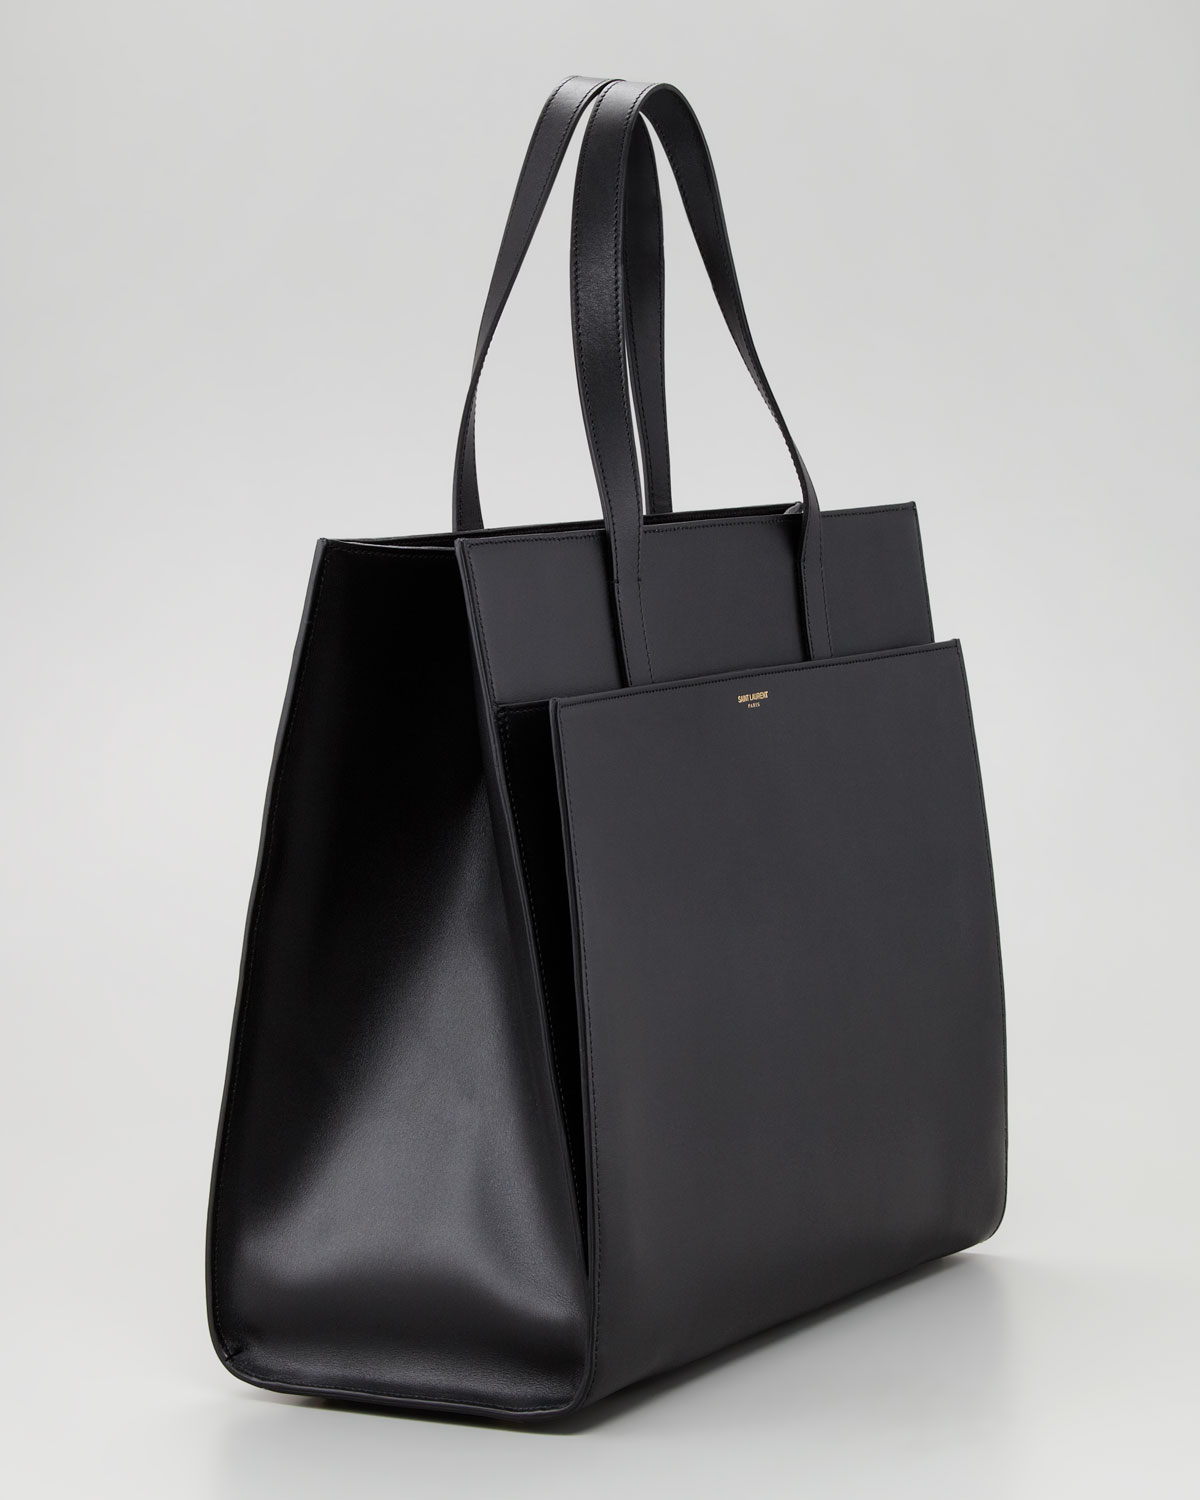 Sale On Saint Laurent Shopping Bag Tote | SEMA Data Co-op